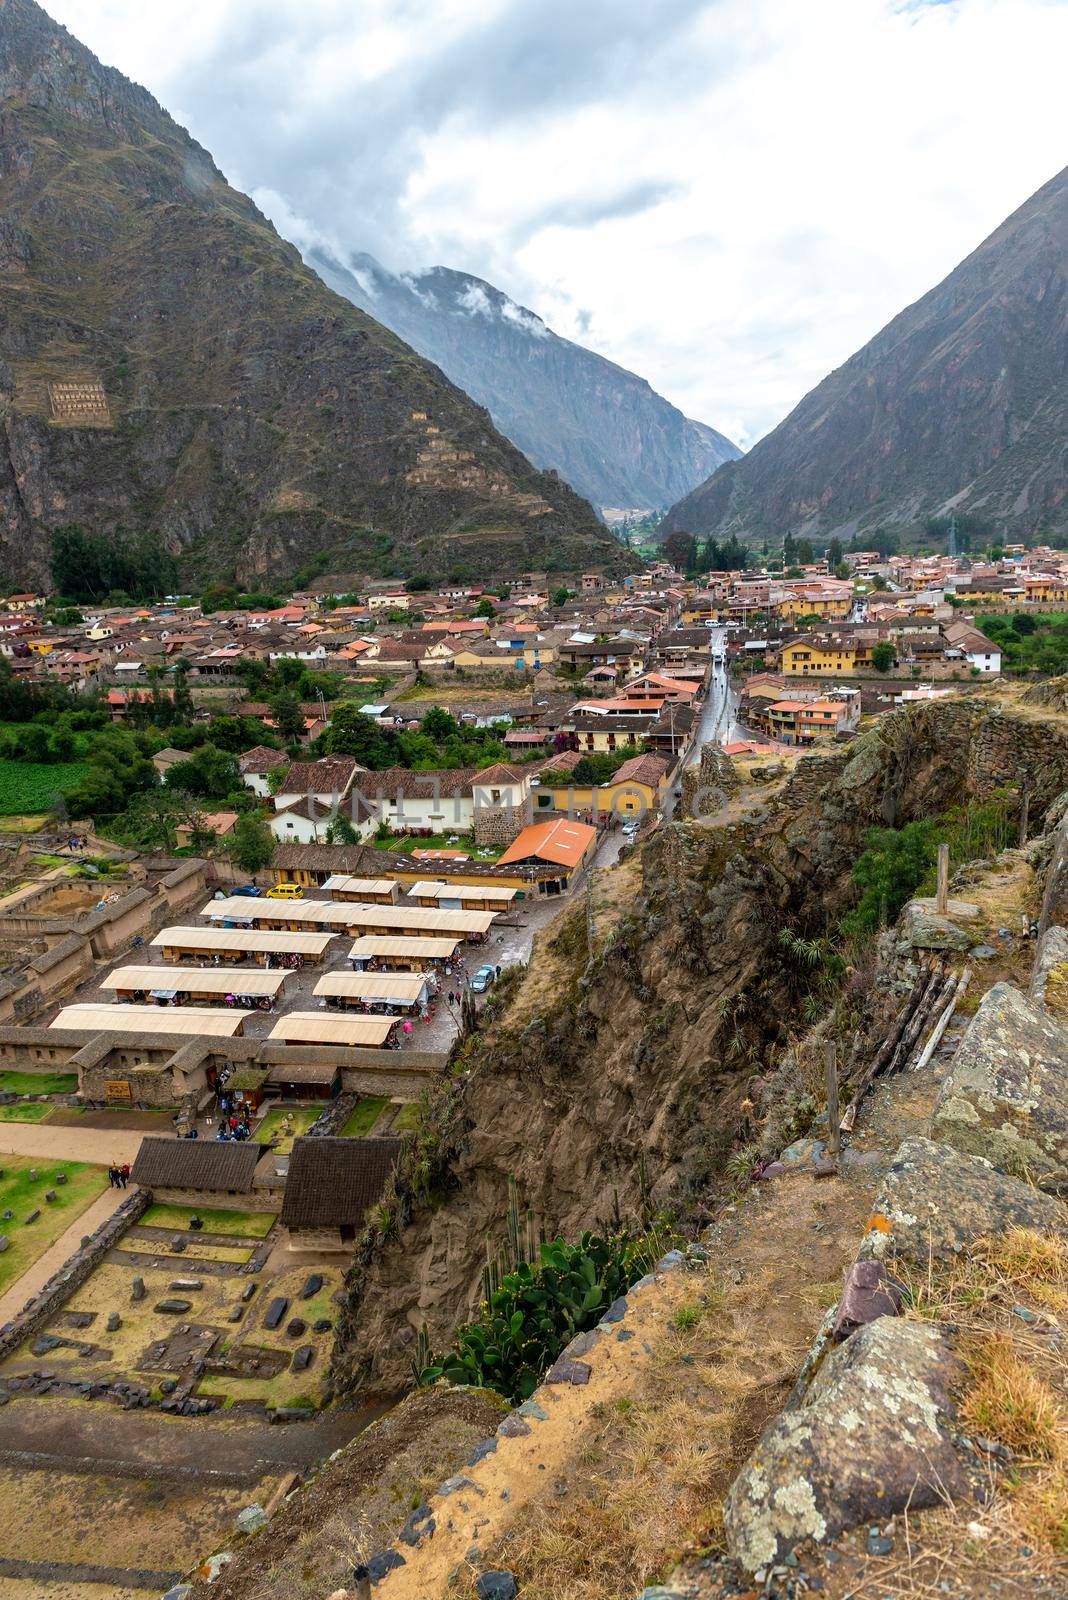 The village near to Cusco, Peru by tan4ikk1